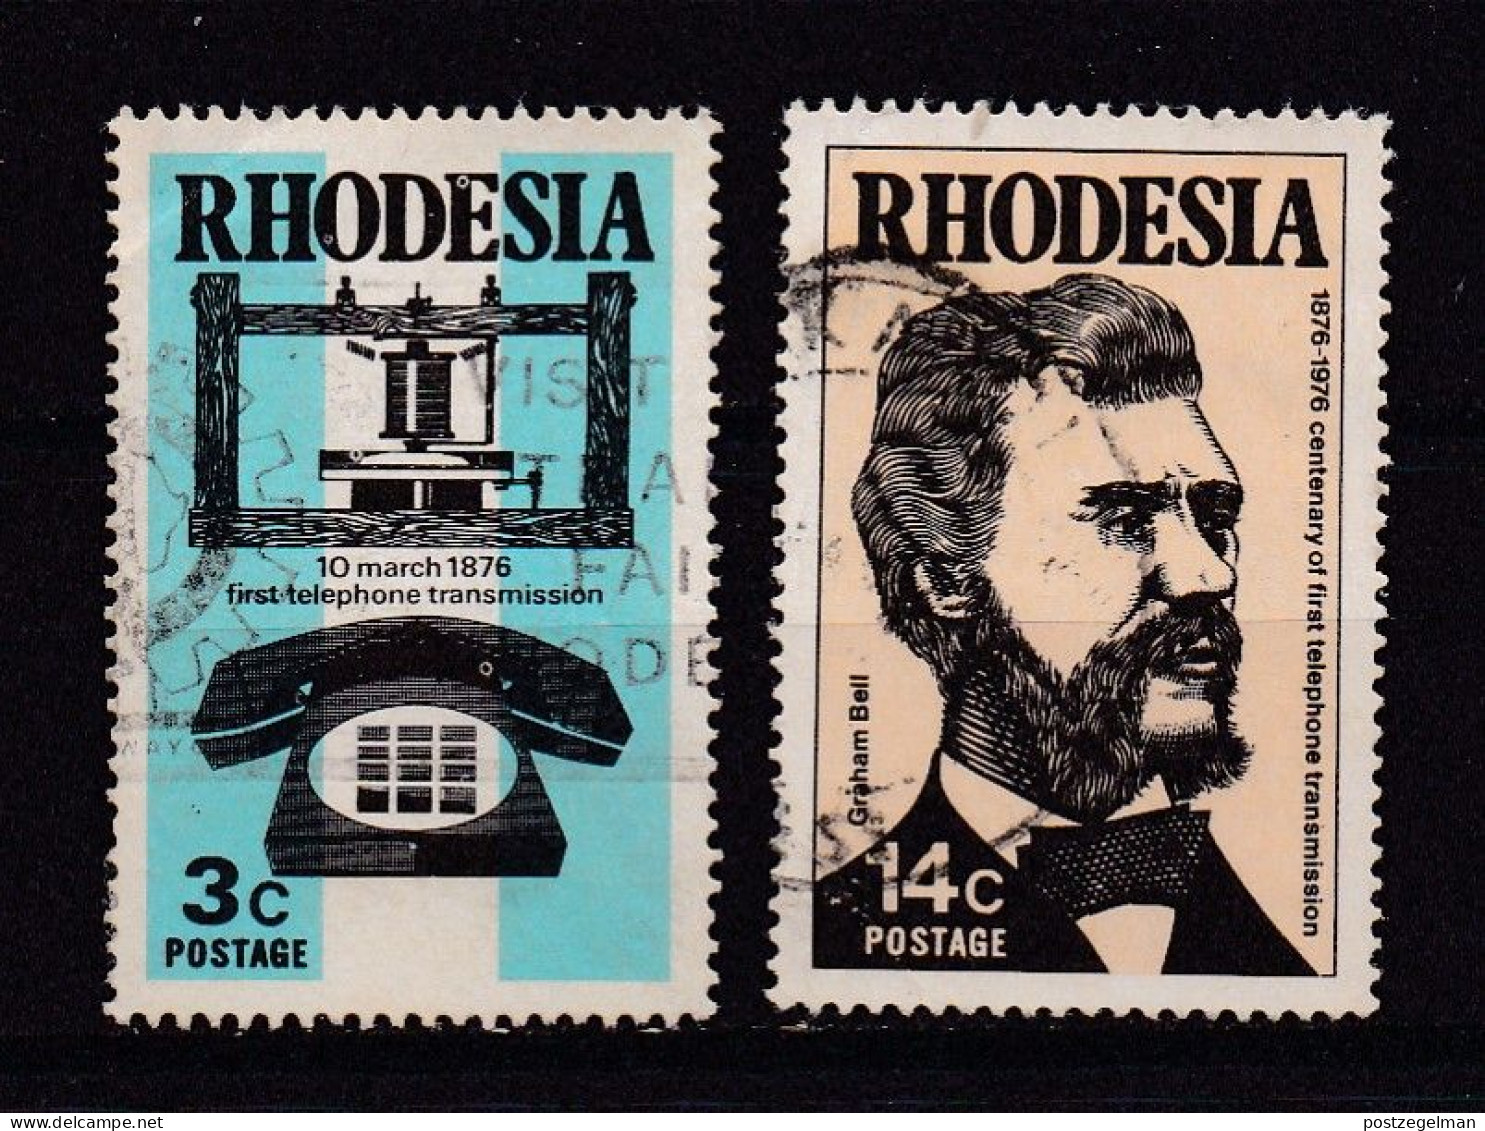 RHODESIA 1976 Used Stamps Telephone Michel Nr. 171-172, Scannr, 455 - Rhodesia (1964-1980)